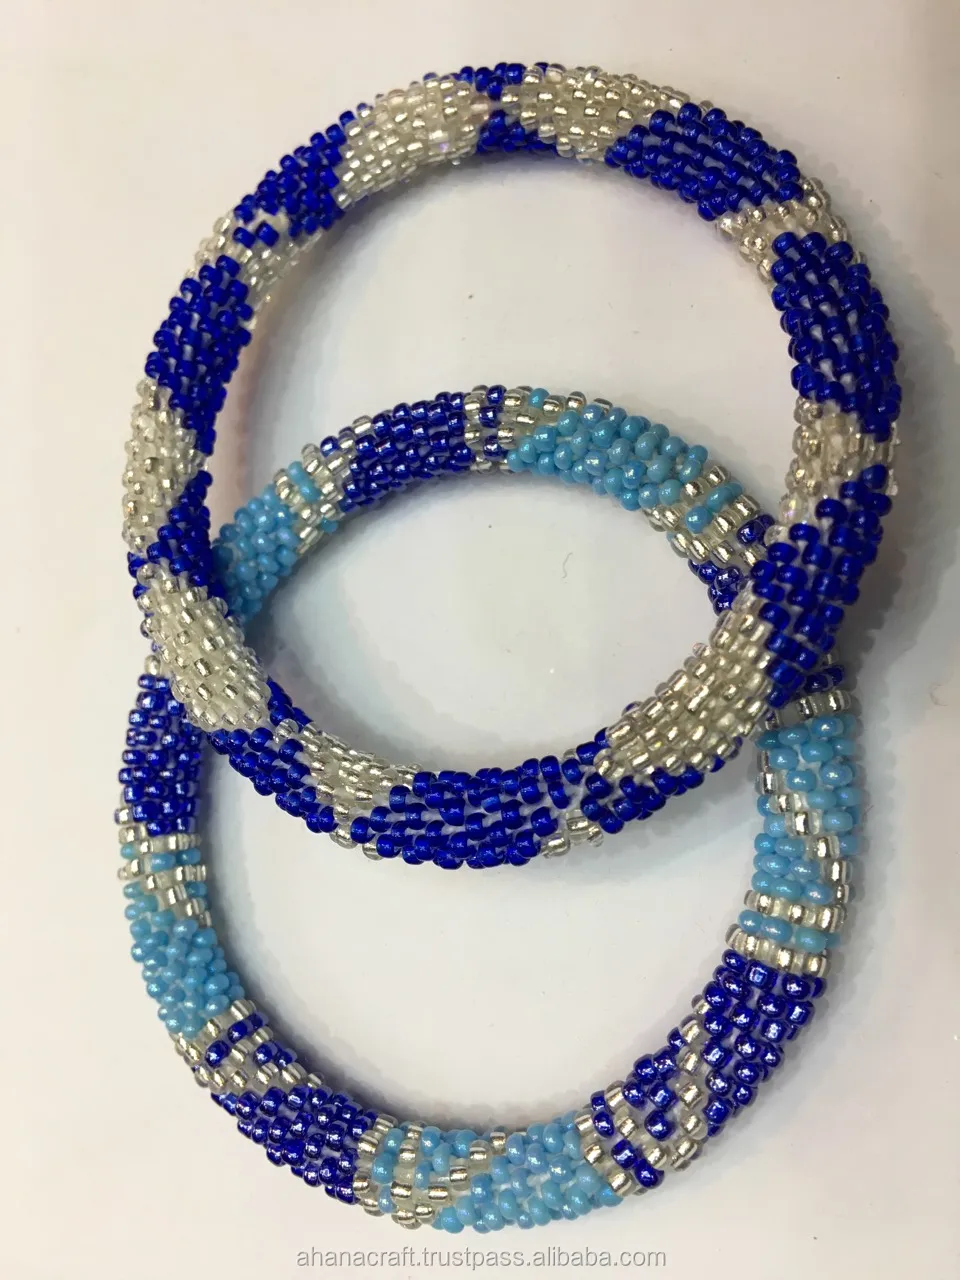 Nepal Bracelet Czech Glass Seed Bead Crochet Nepal Handmade Bracelet HL518 